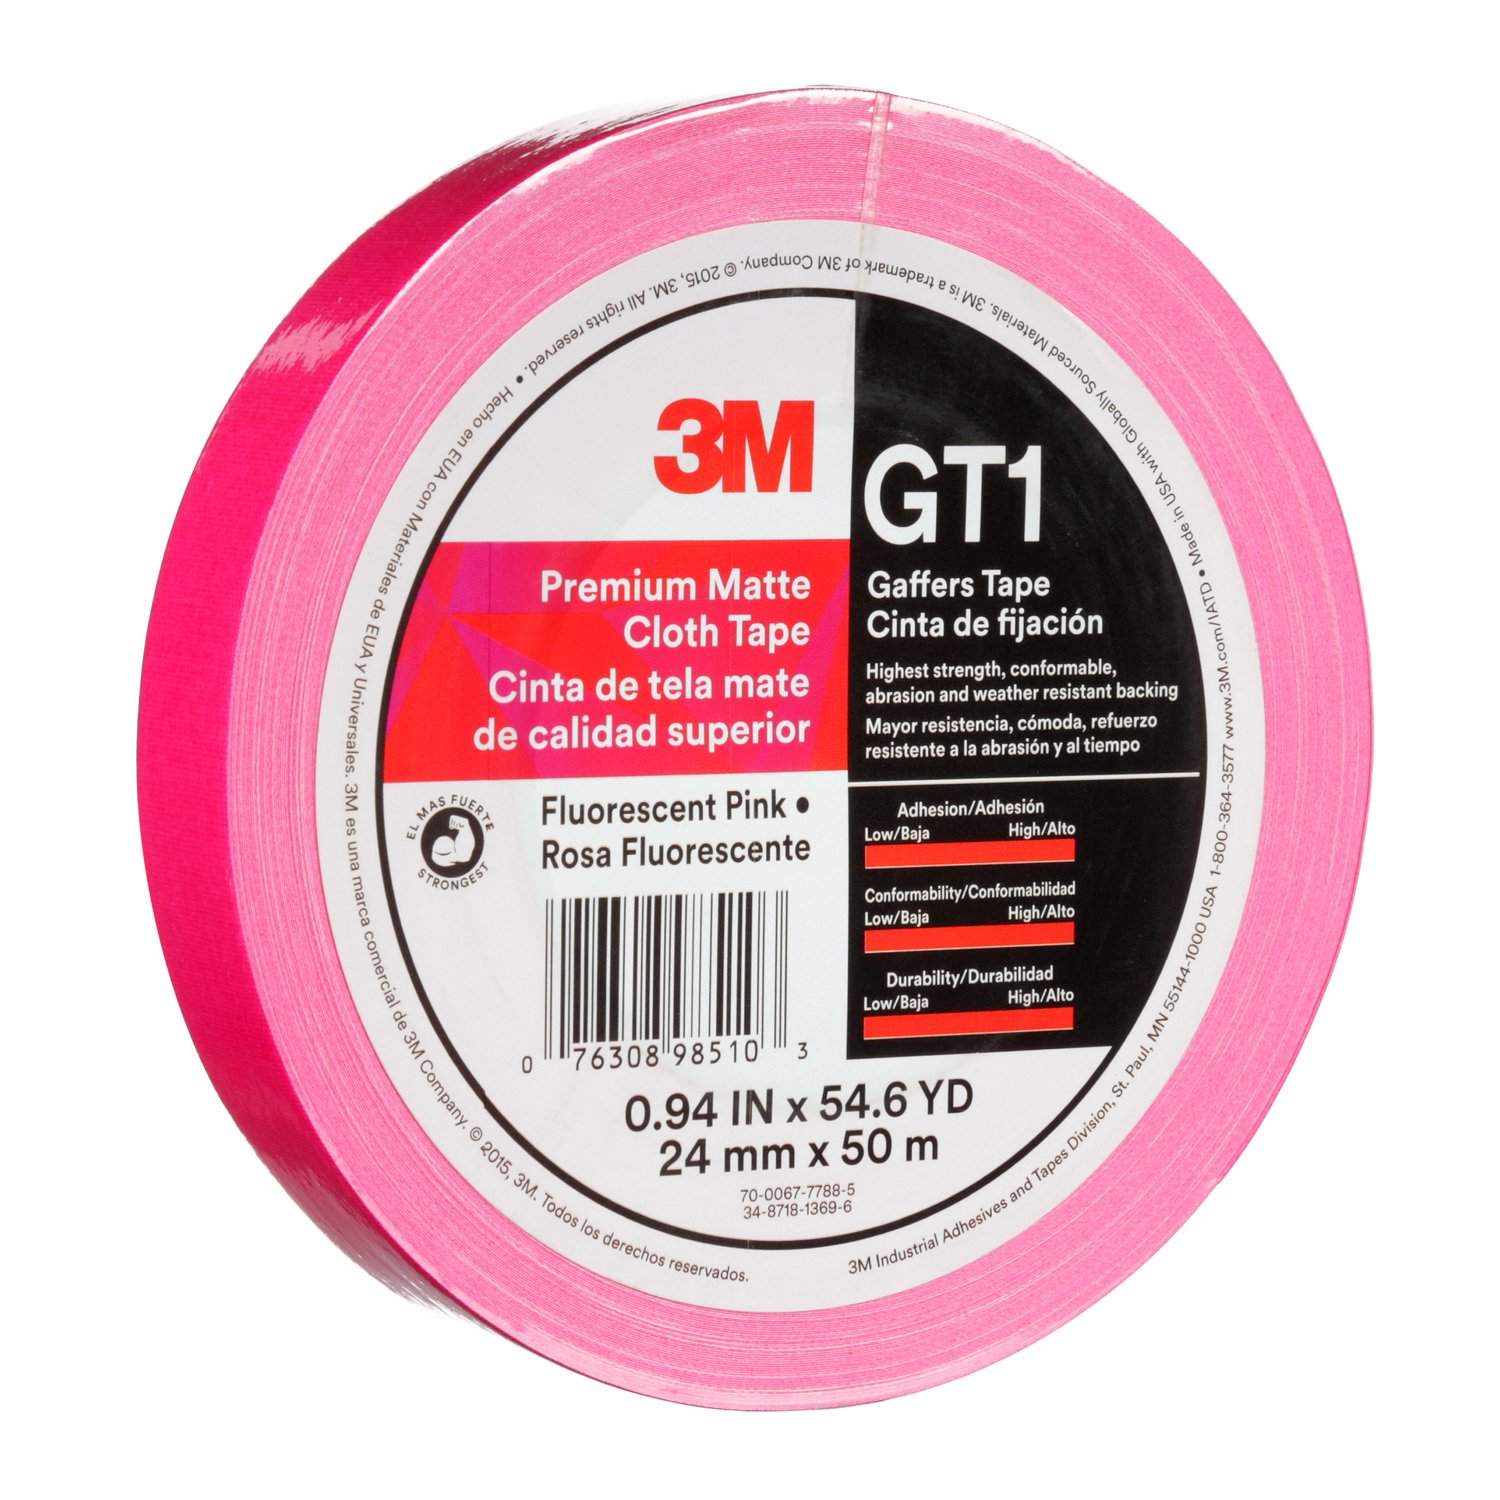 7010376460 - 3M Premium Matte Cloth (Gaffers) Tape GT1, Fluorescent Pink, 24 mm x 50
m, 11 mil, 48/Case